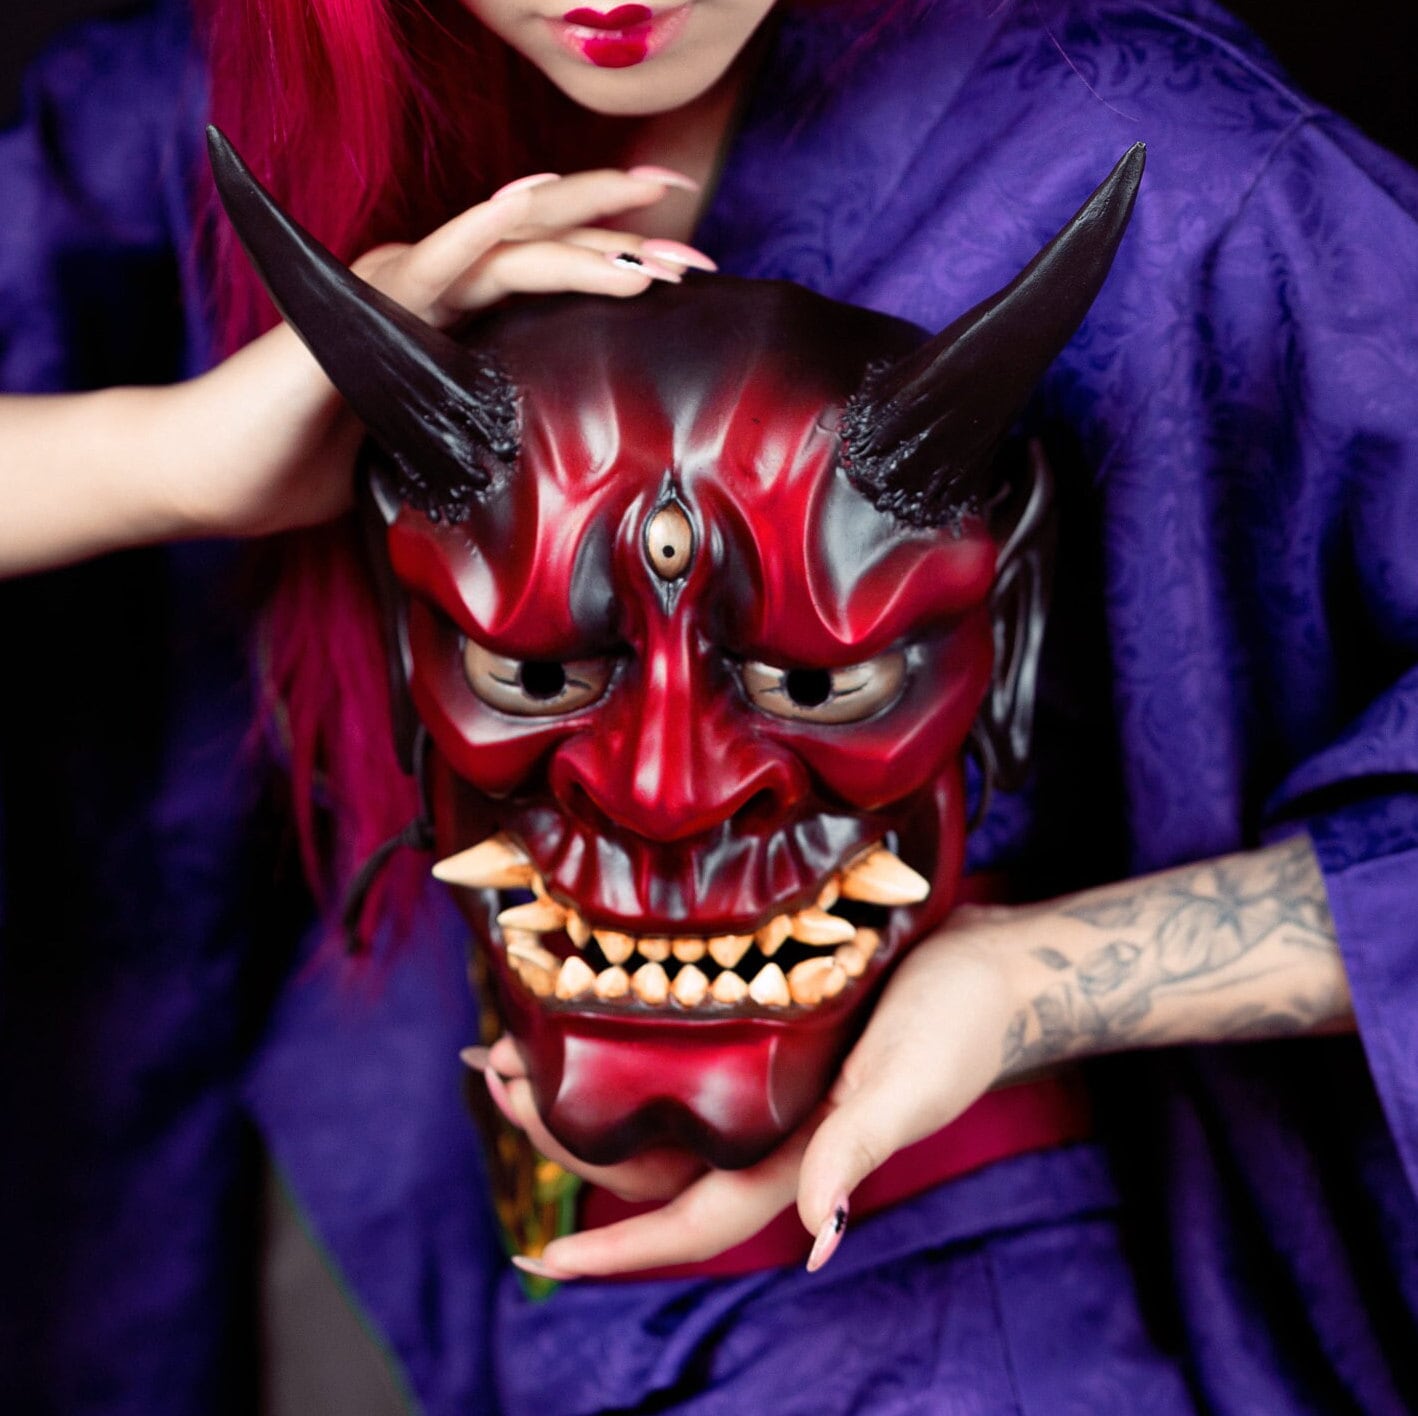 Red Oni Mask Plastic Mask 2